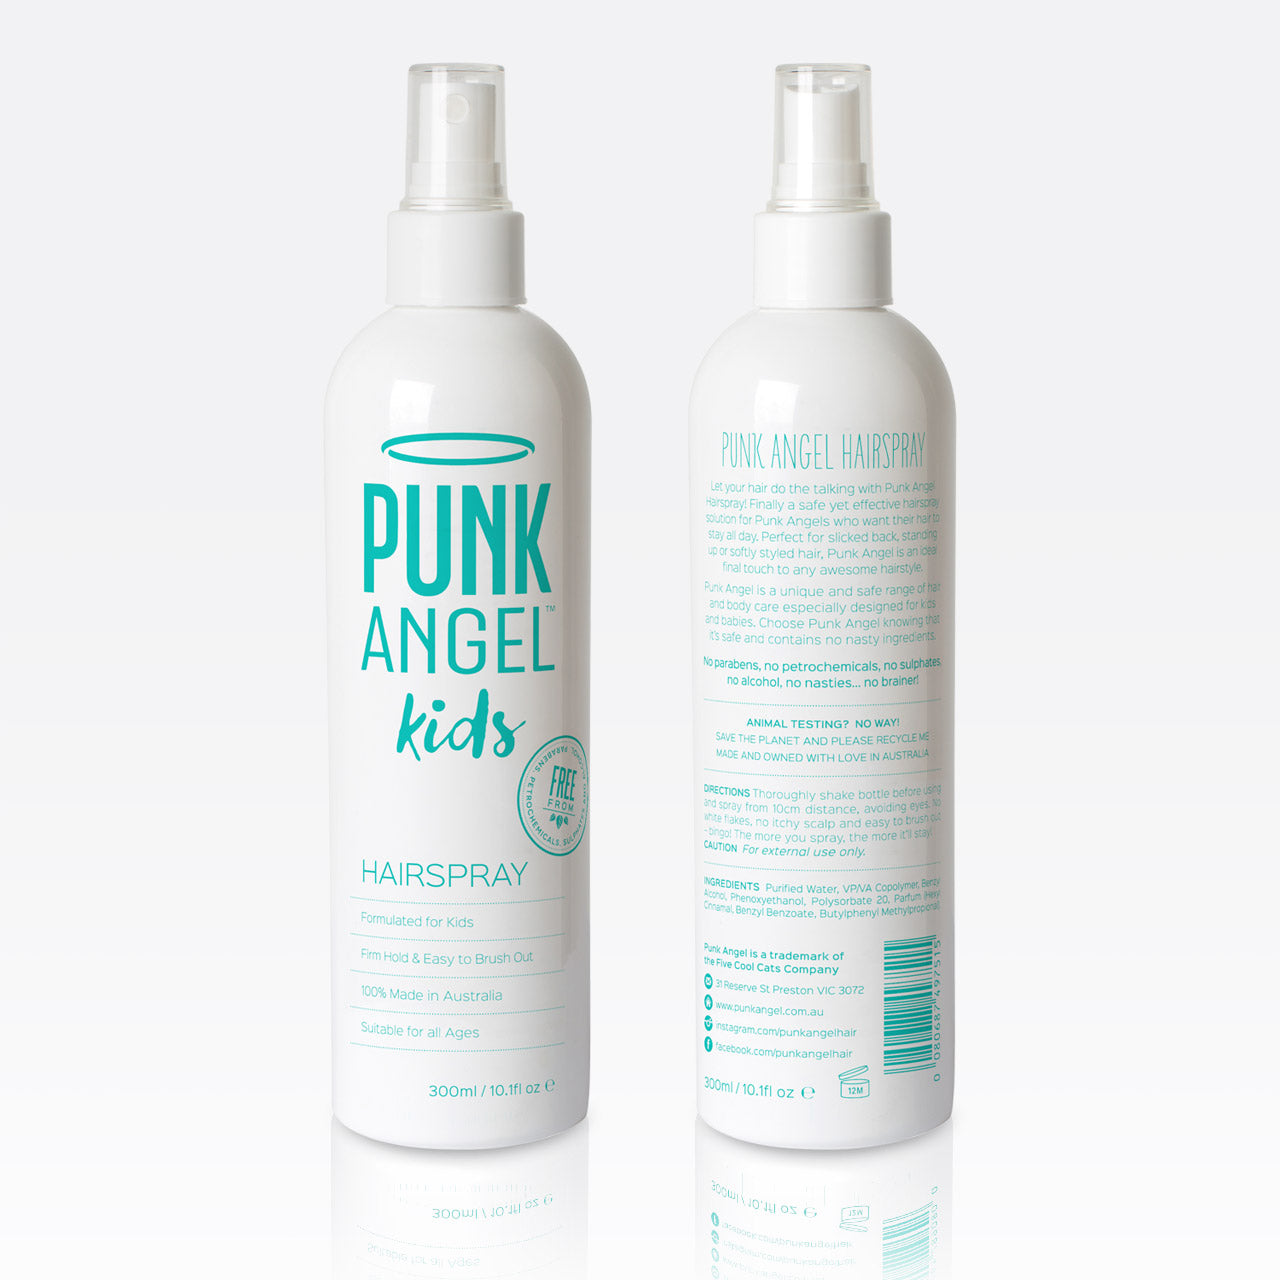 PUNK ANGEL Hairspray